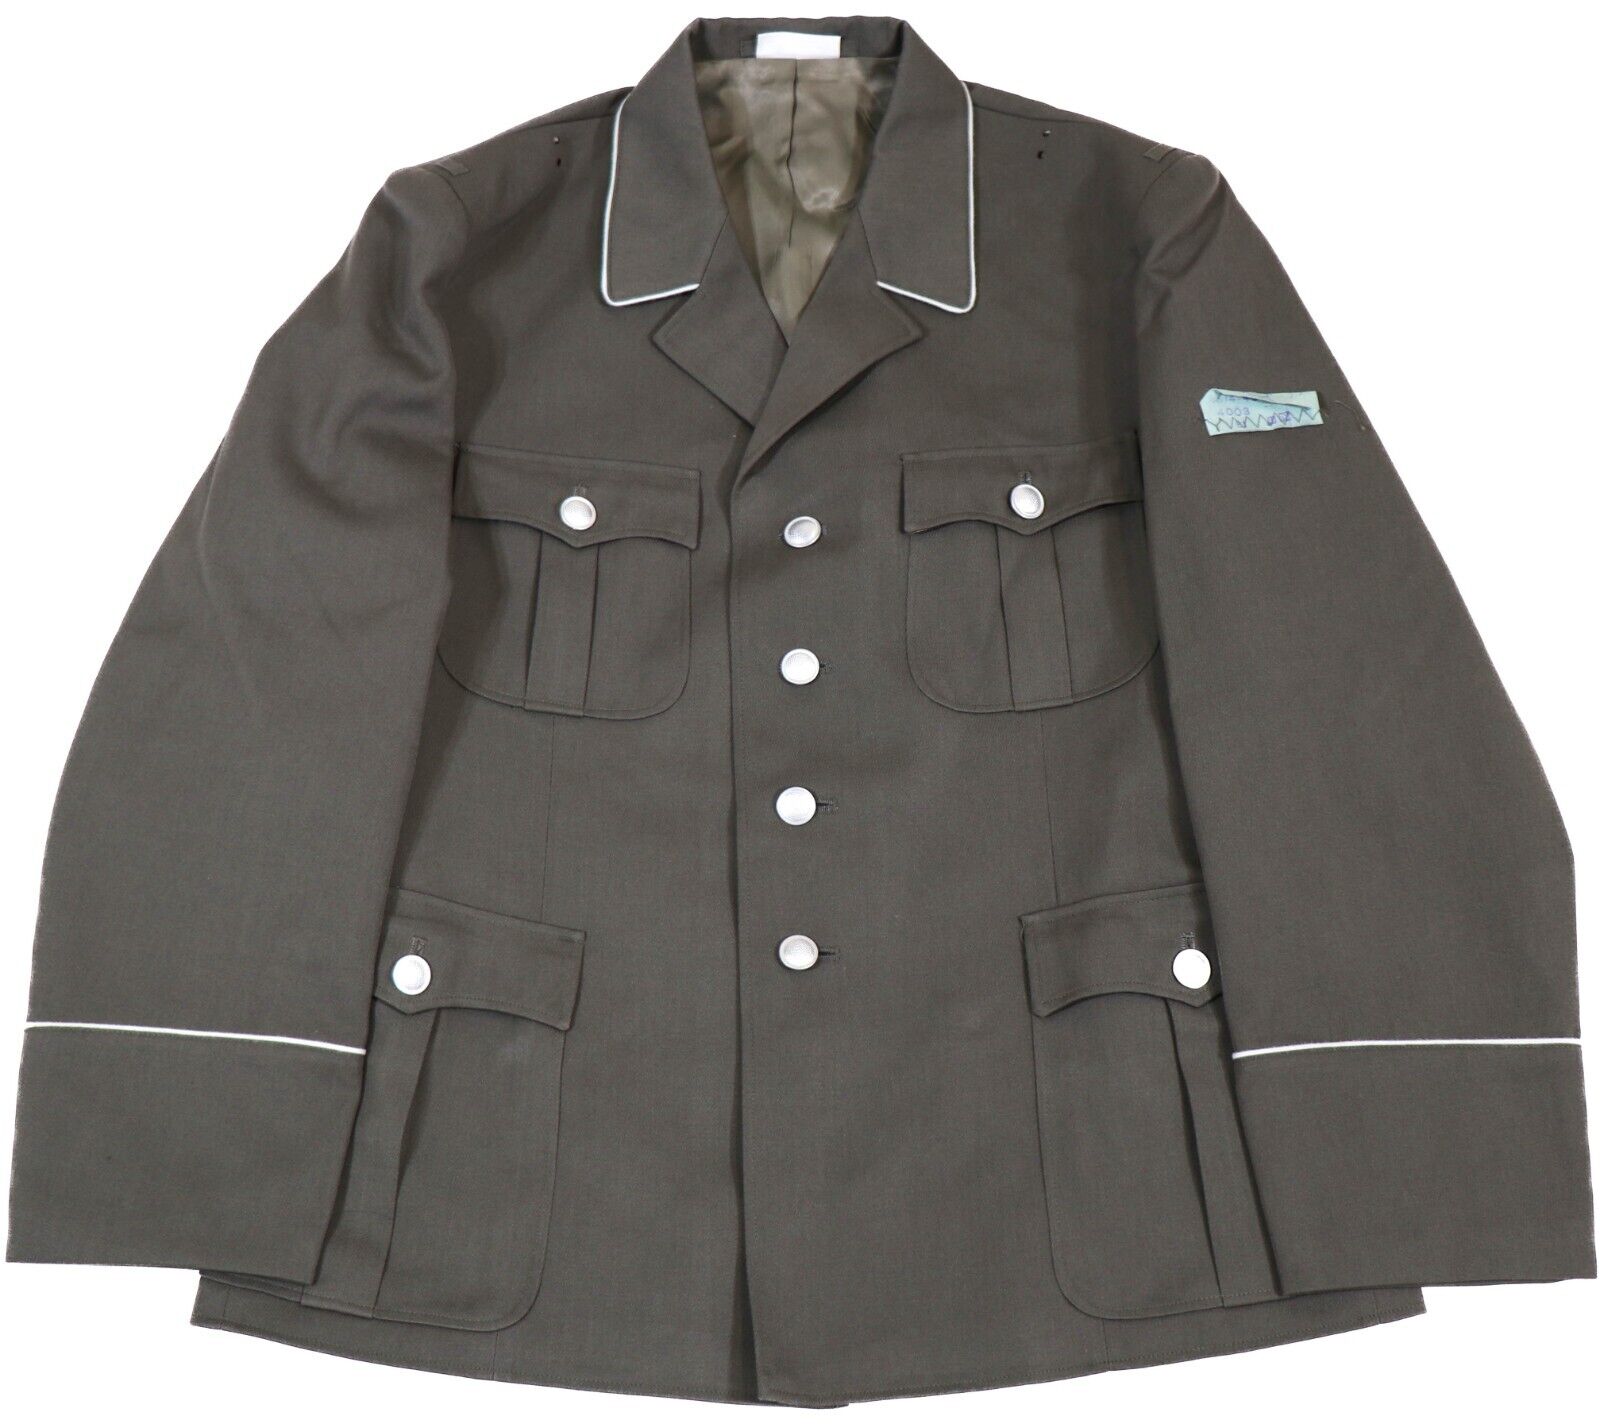 Medium G48-1 - East German NVA DDR Grey Officer Military Dress Jacket Tunic